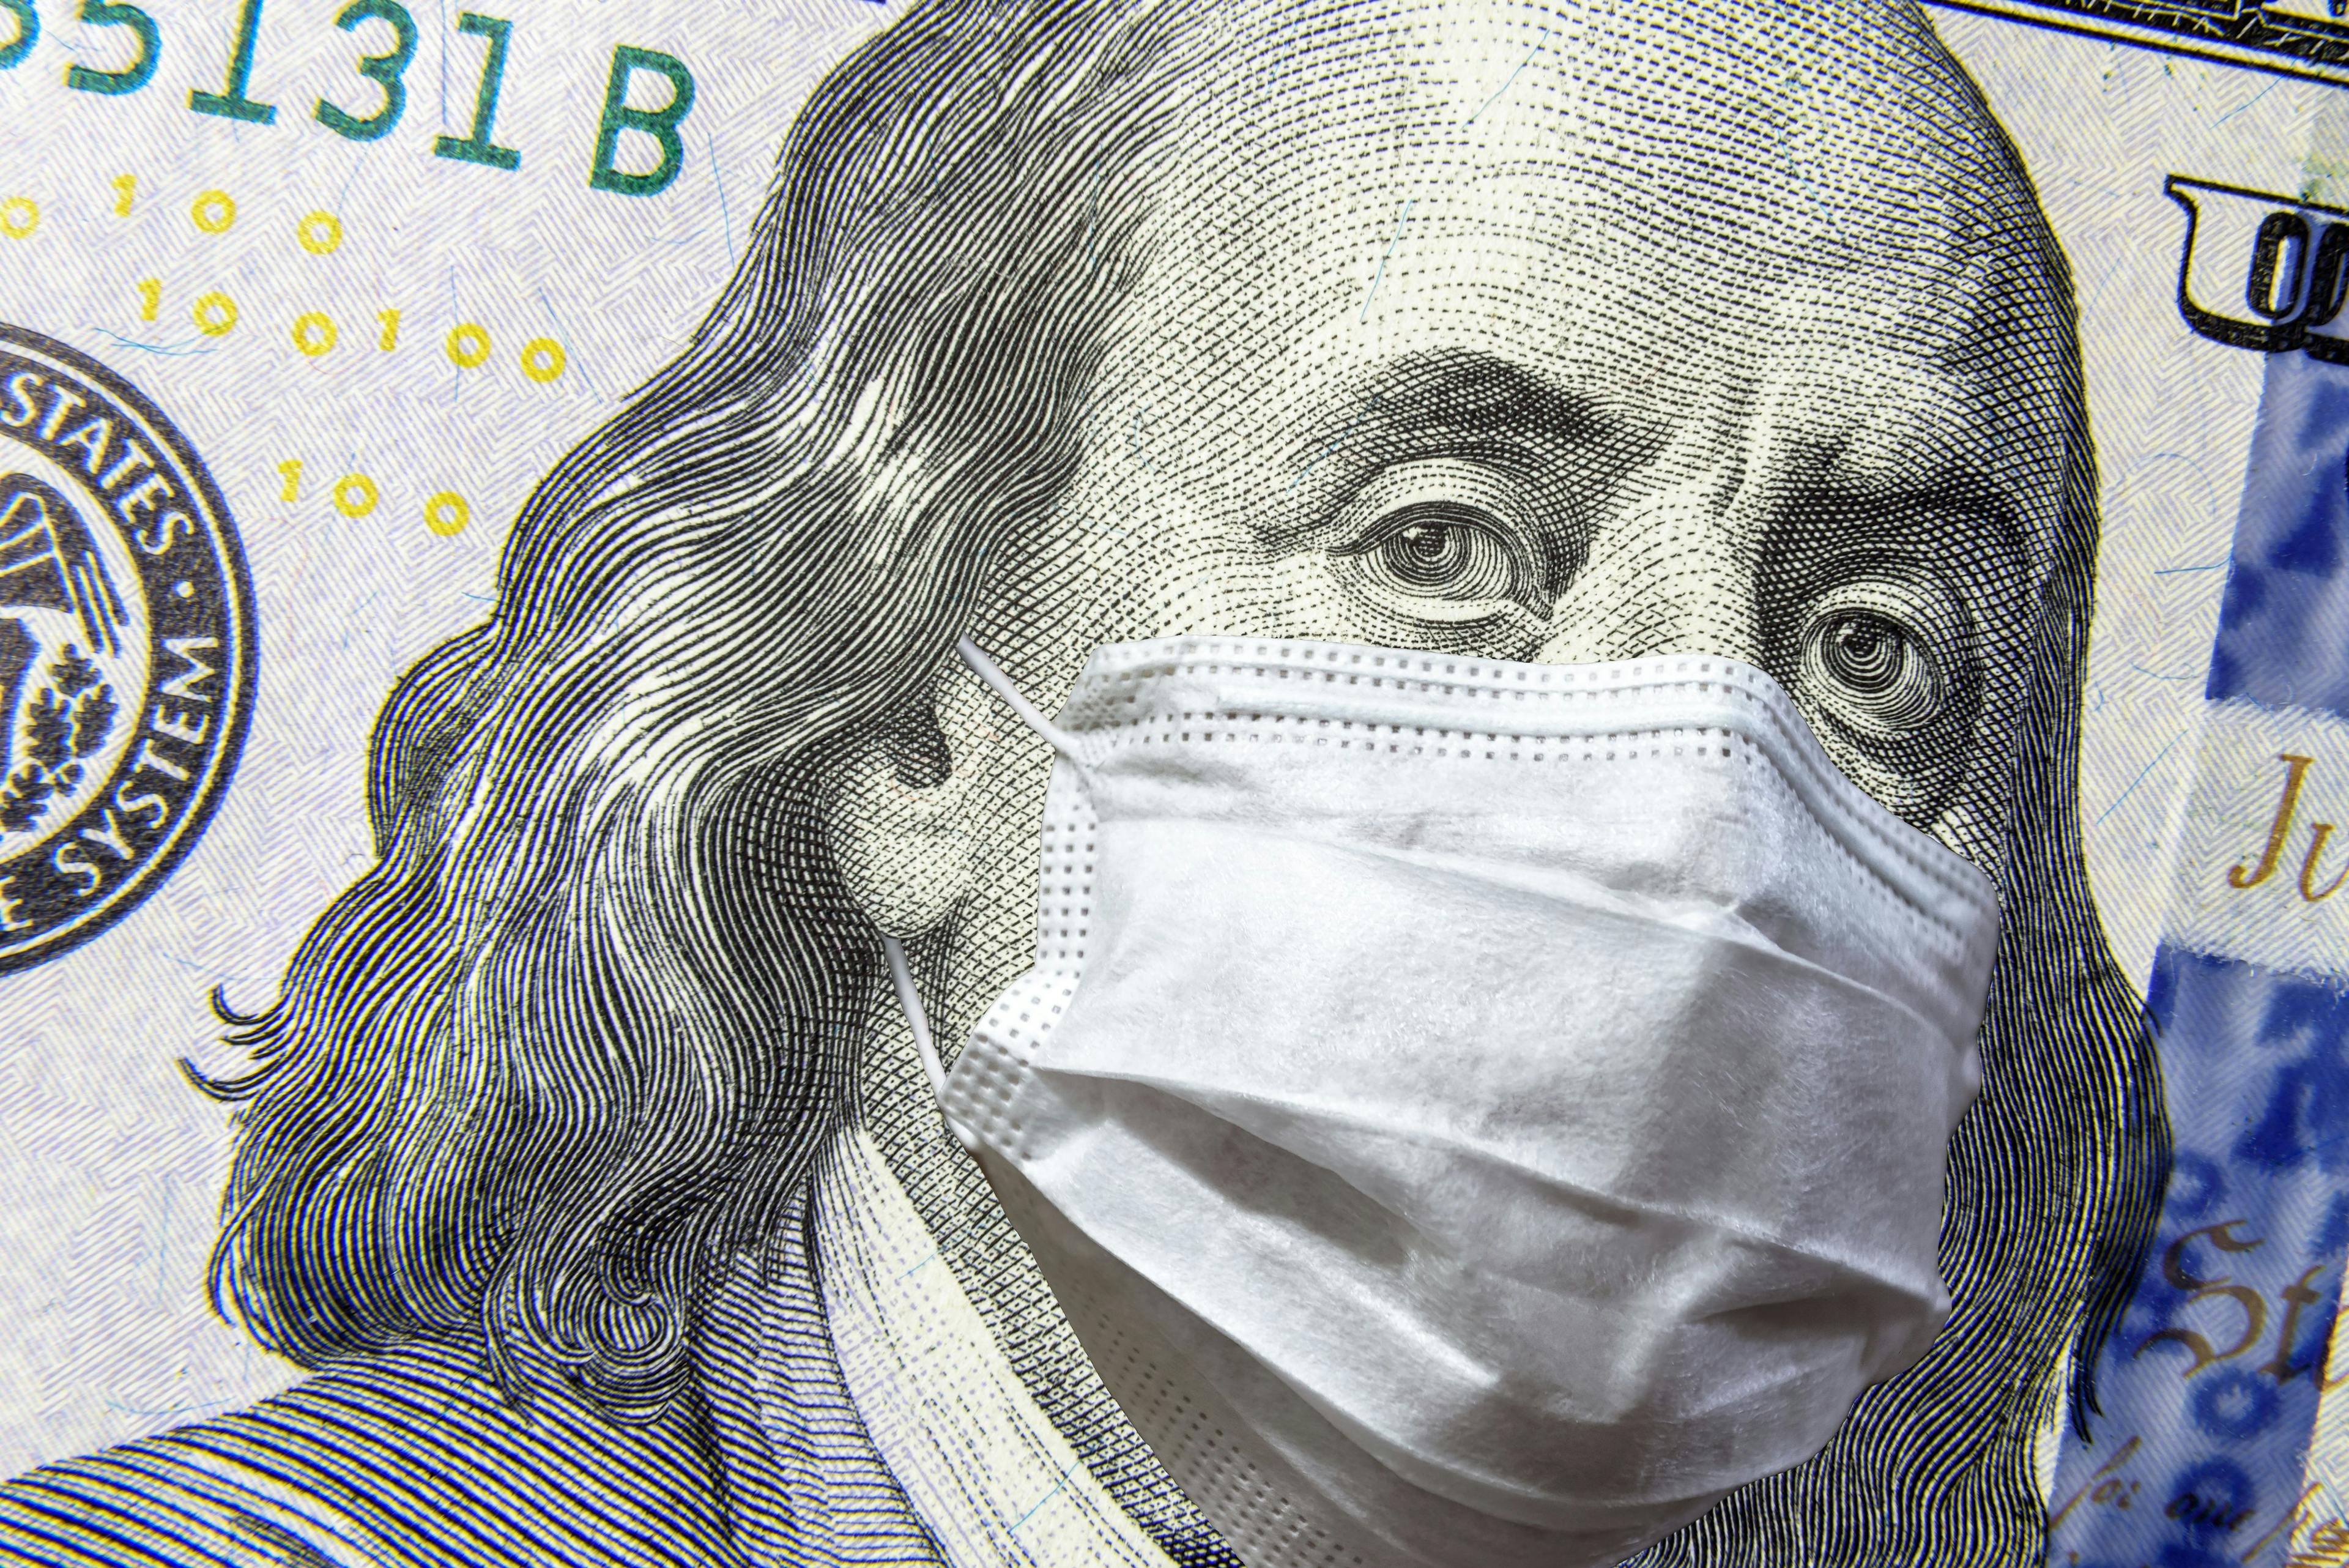 COVID-19 coronavirus in USA, 100 dollar money bill with face mask. COVID-19 affects global stock market.